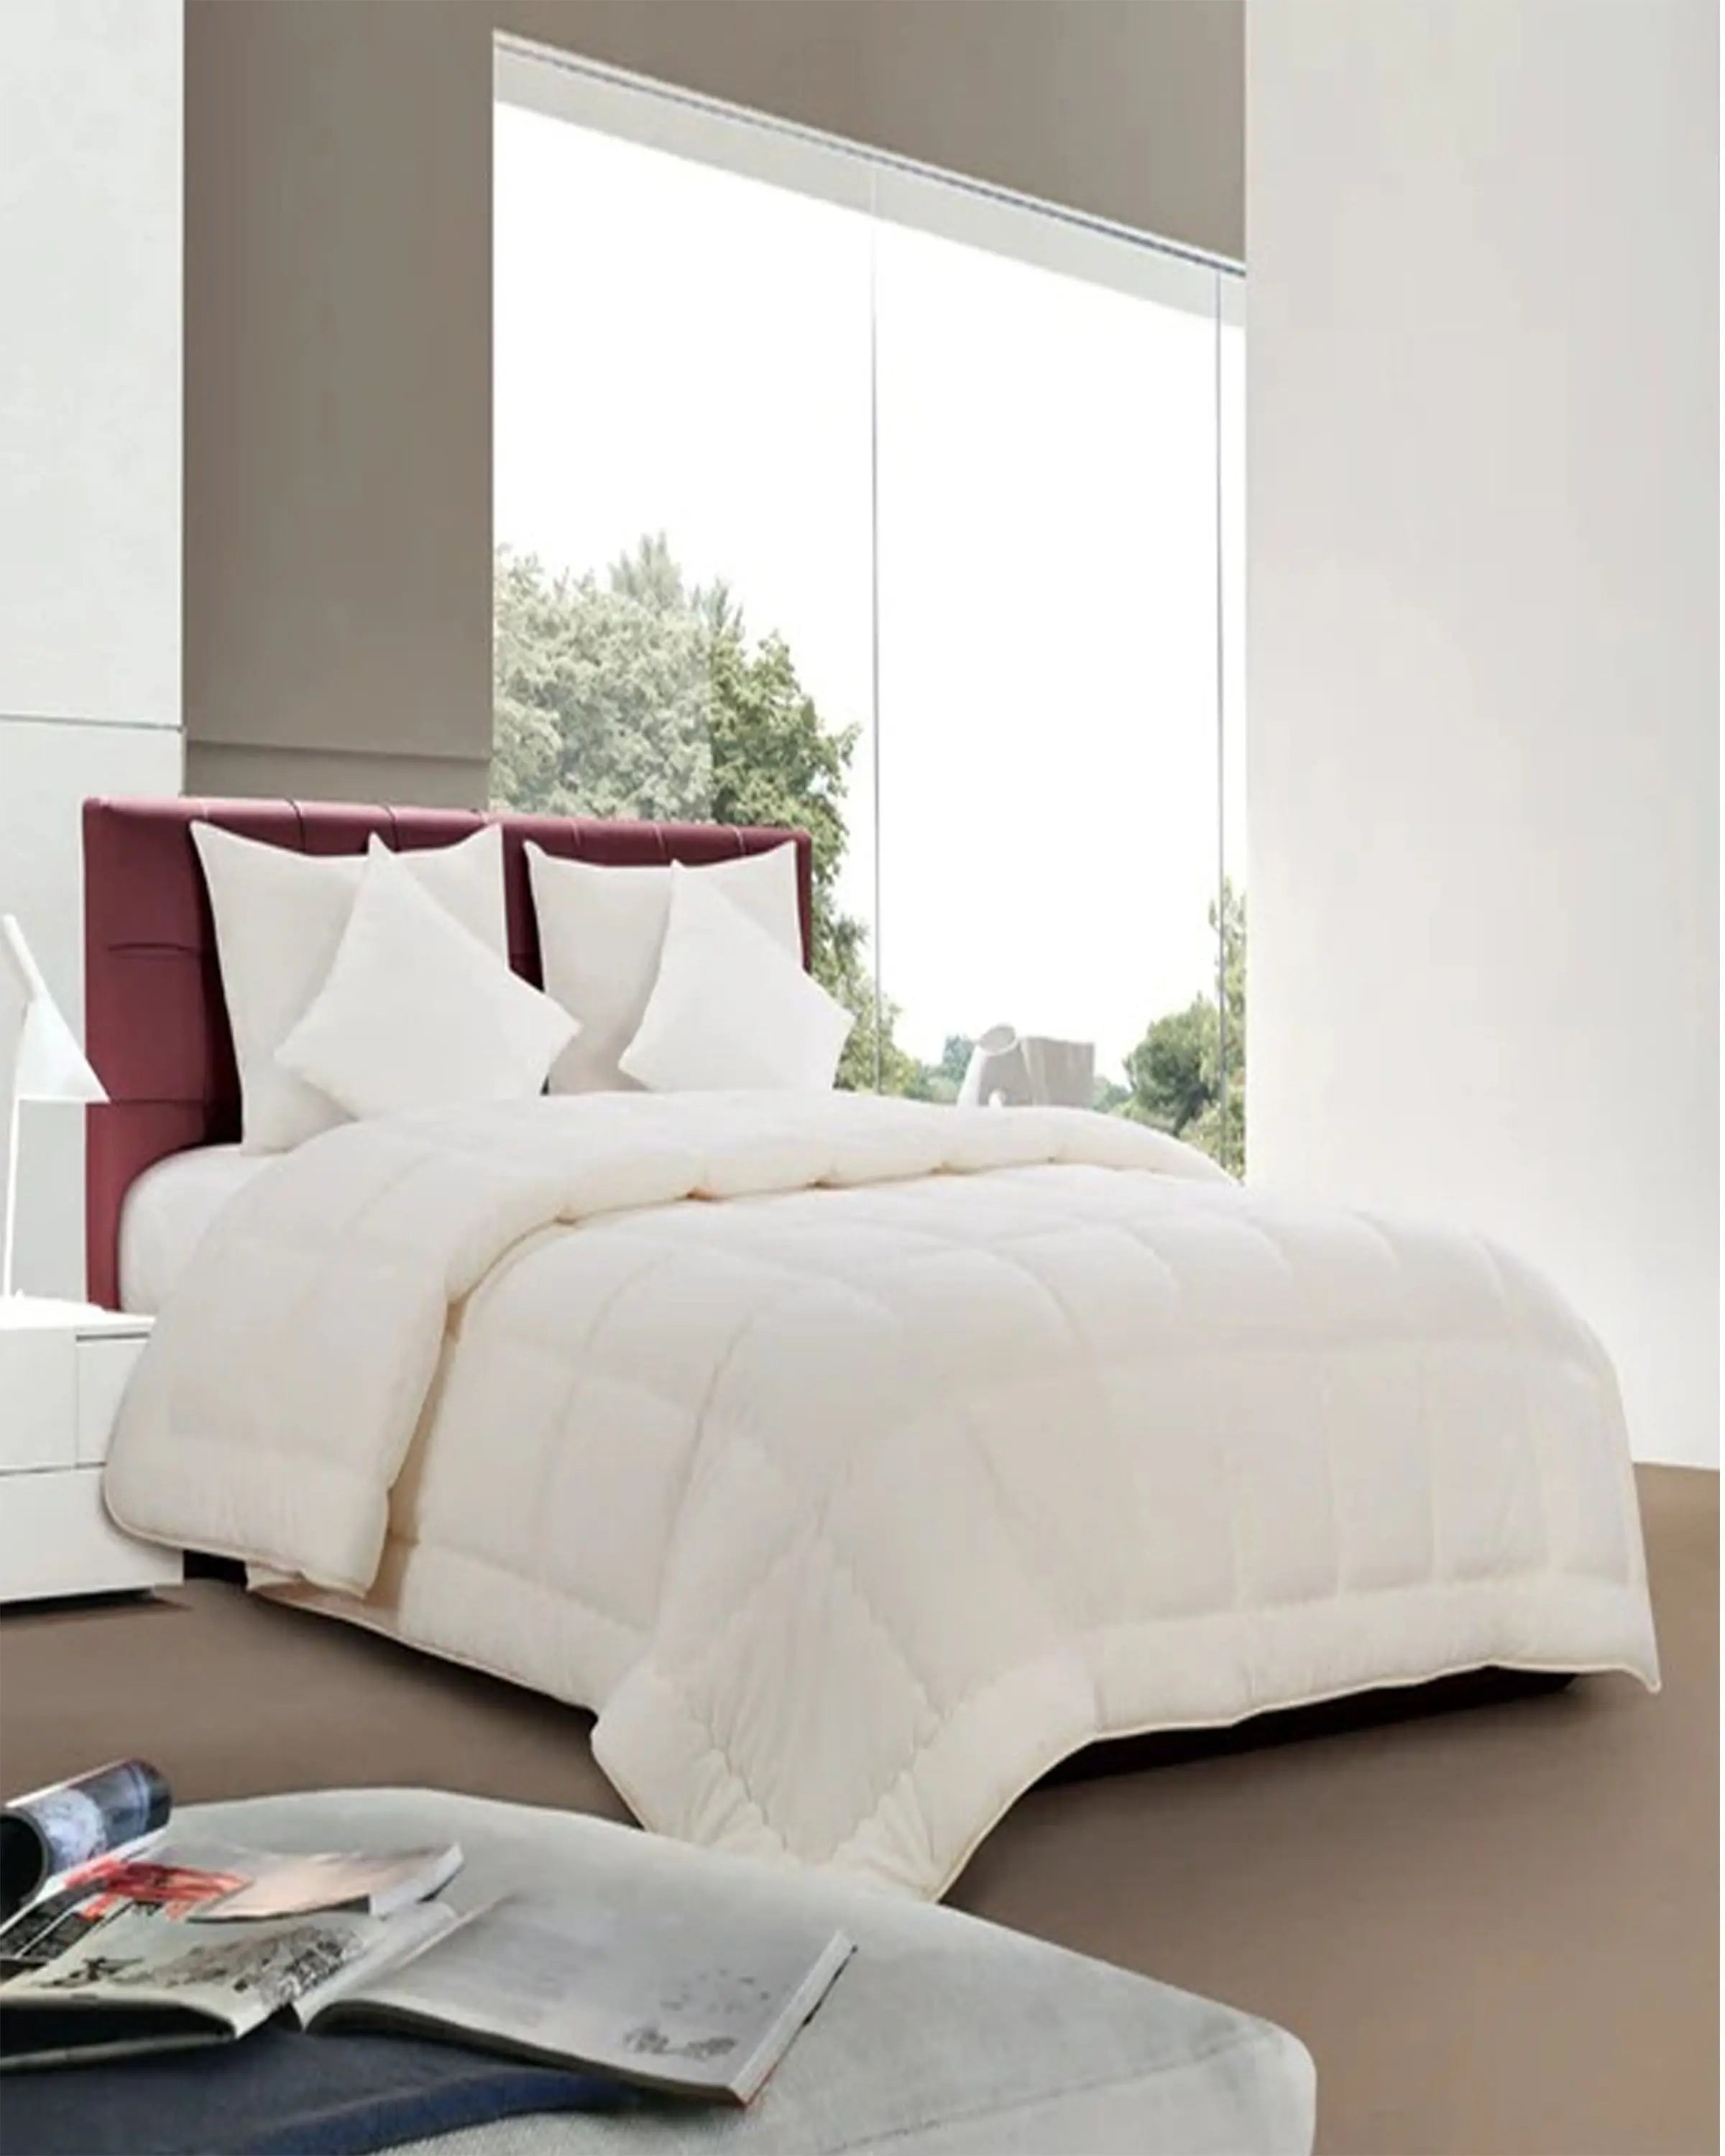 Buy Luxury Queen Size Bed Sheets